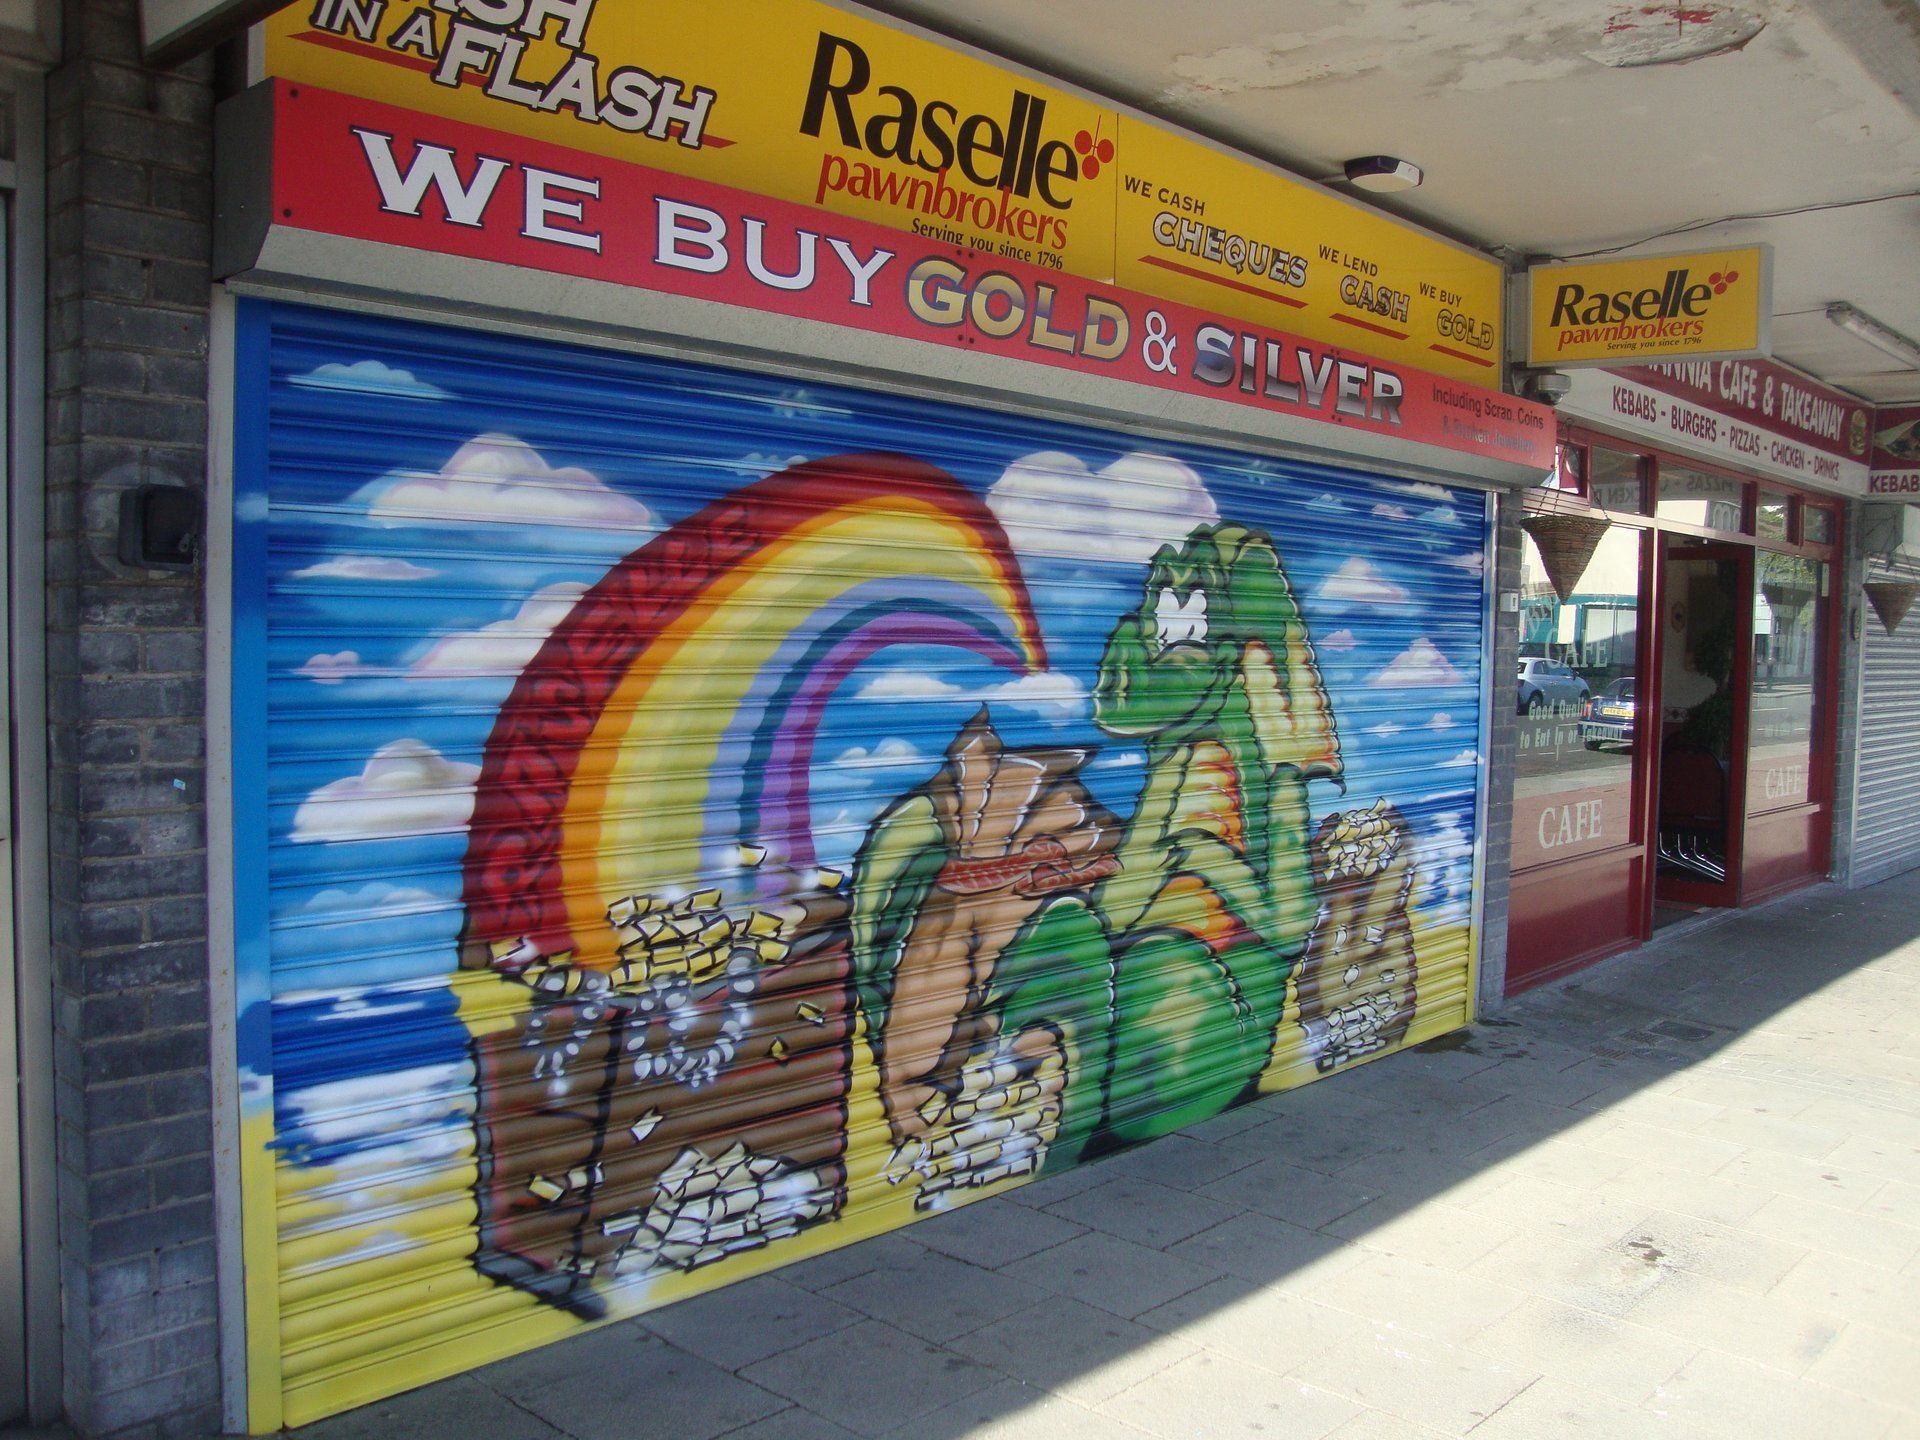 Roller Shutter Mural in a shop in Staple Hill